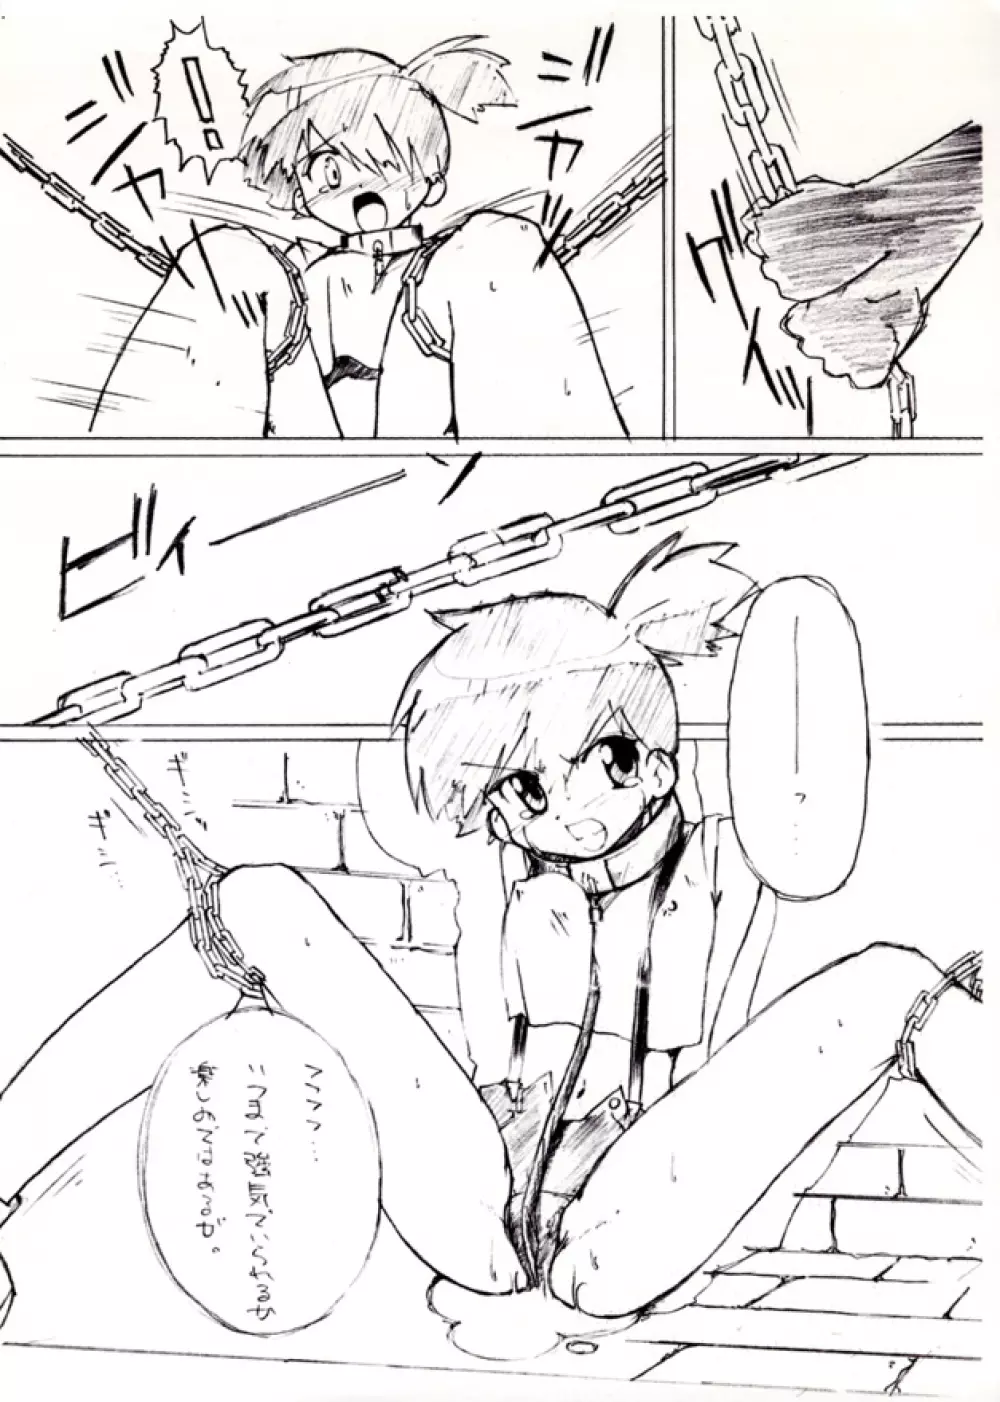 KASUMIX XPLOSION Kasumi Comic part5 - page14